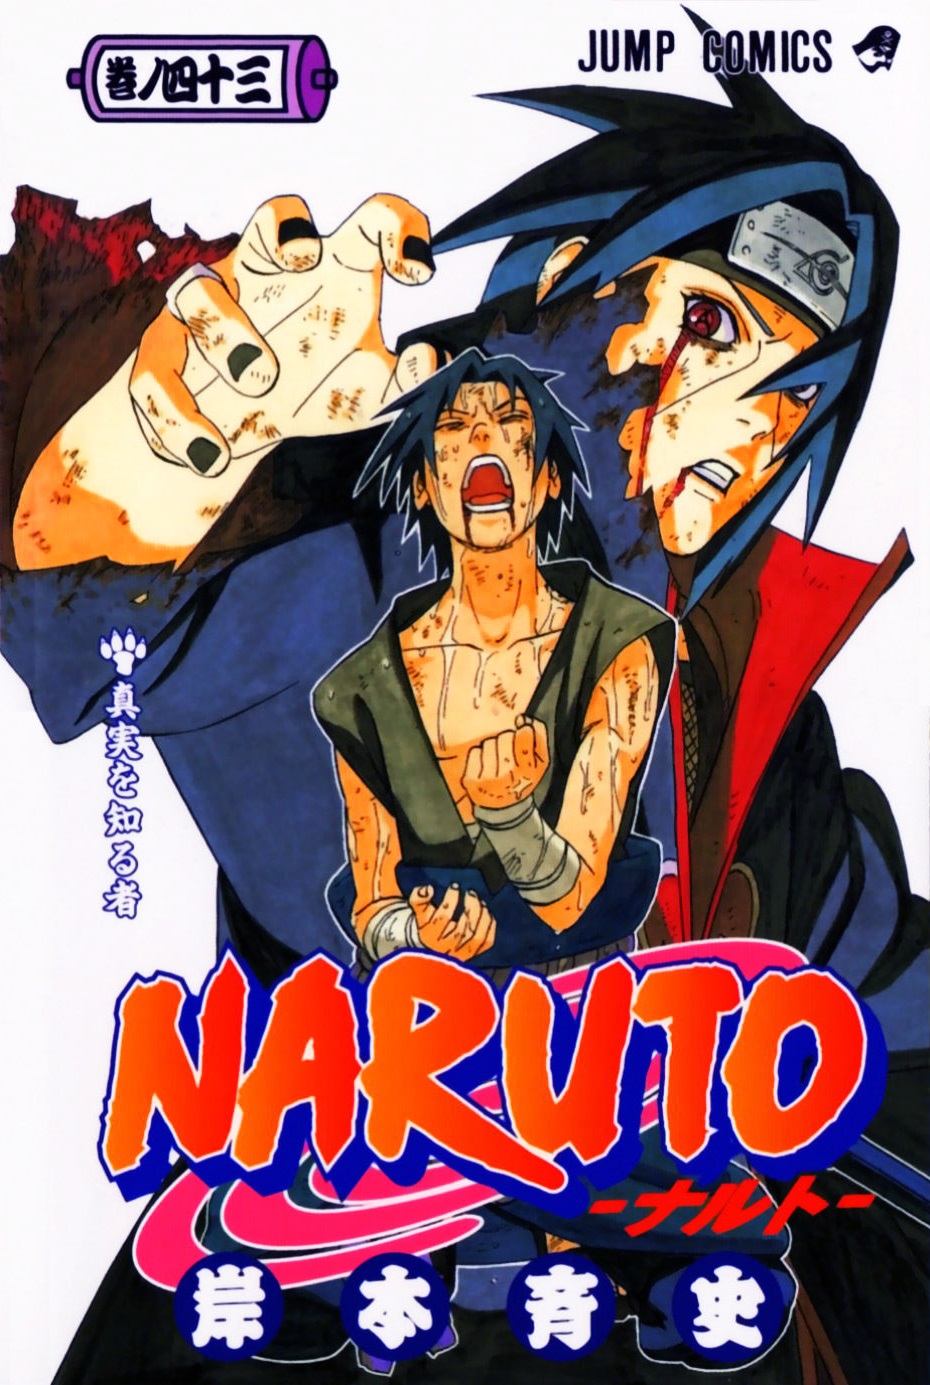 Naruto Manga Volume 43